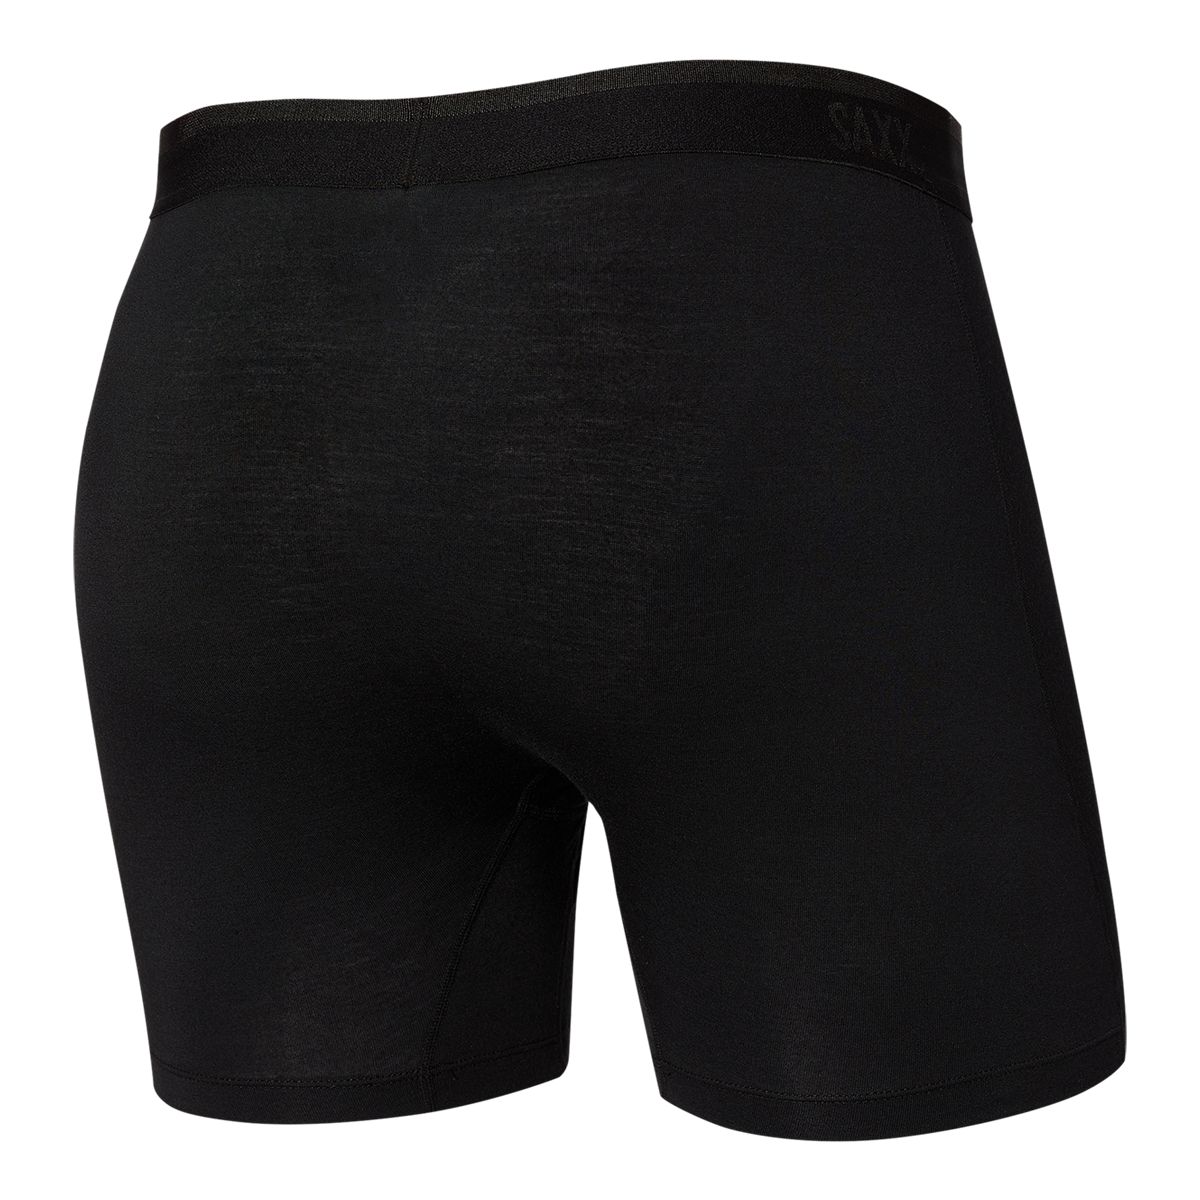 Men's Breathable Technical Mesh Trunk - Men's Underwear & Socks